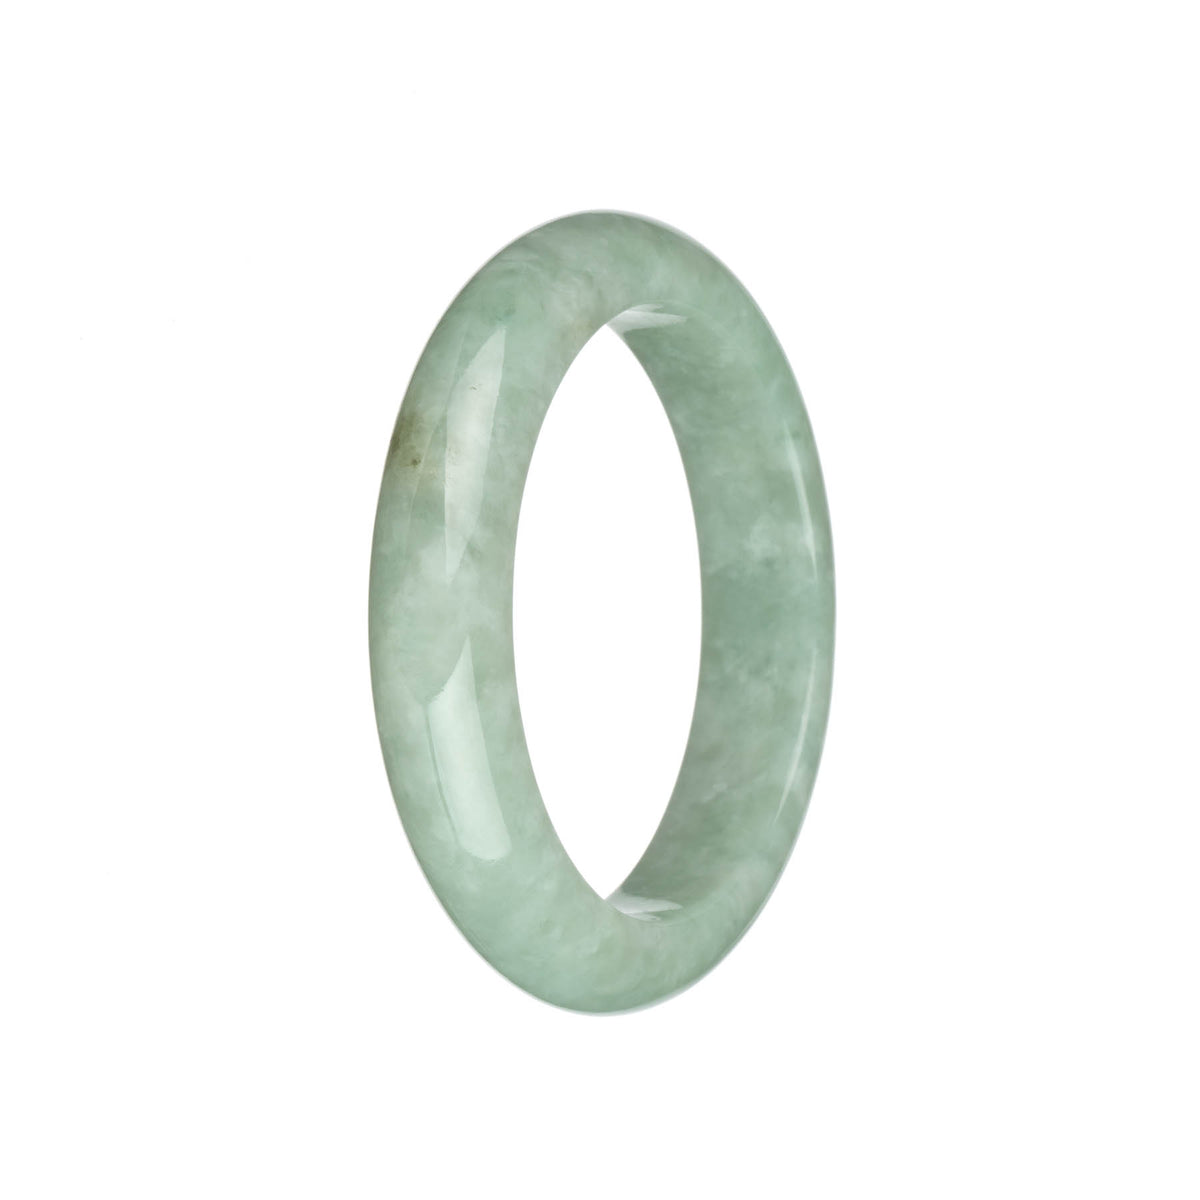 Authentic Type A Light Green Burmese Jade Bracelet - 58mm Half Moon